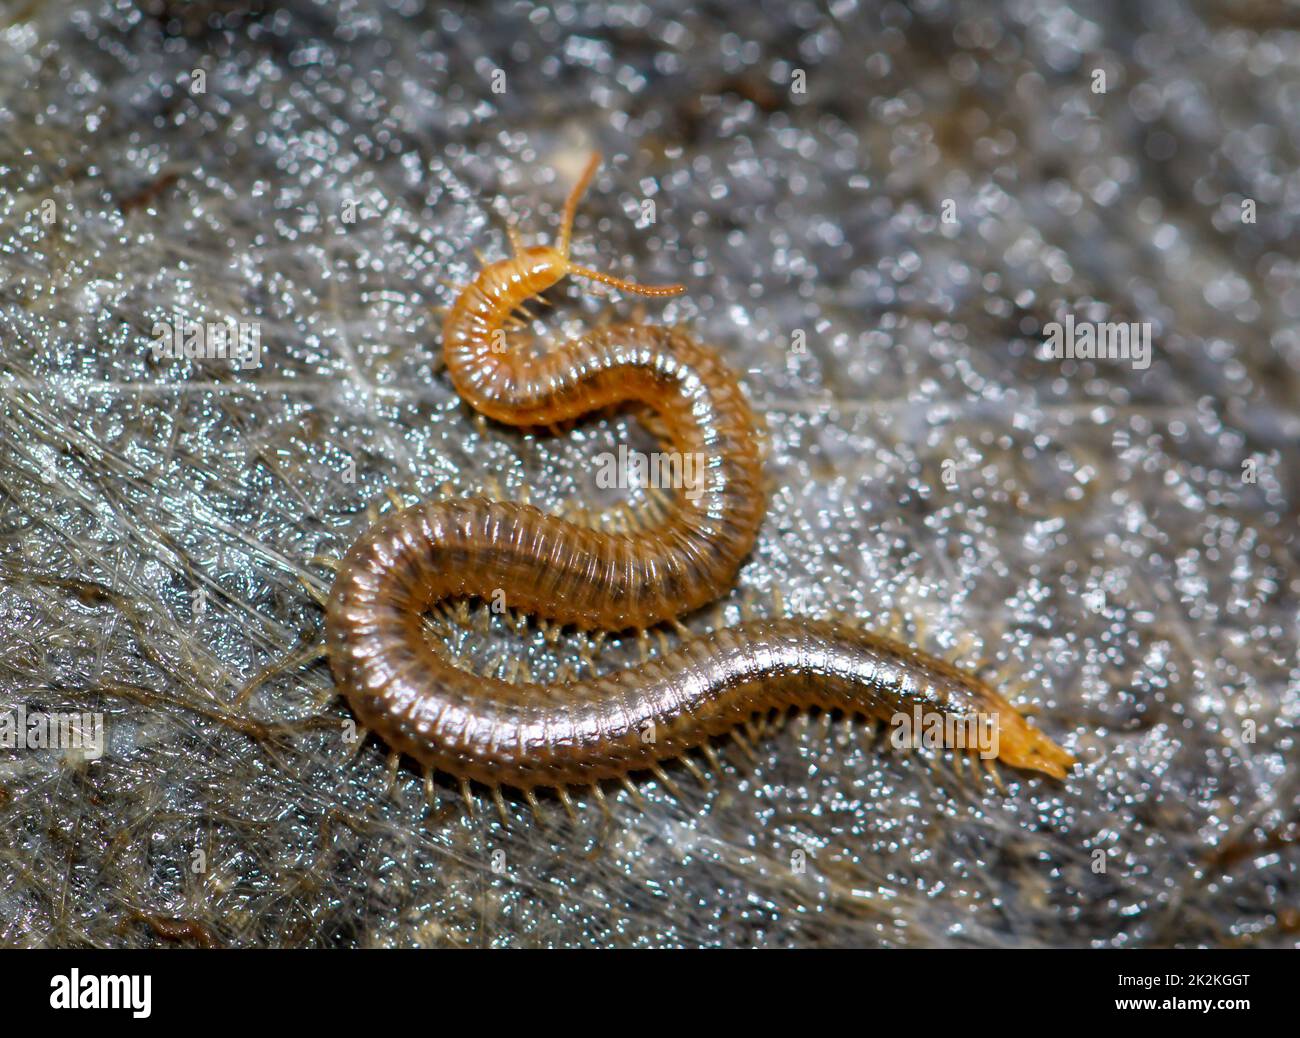 A close-up of a ground centipede, Geophilus carpophagus. Stock Photo